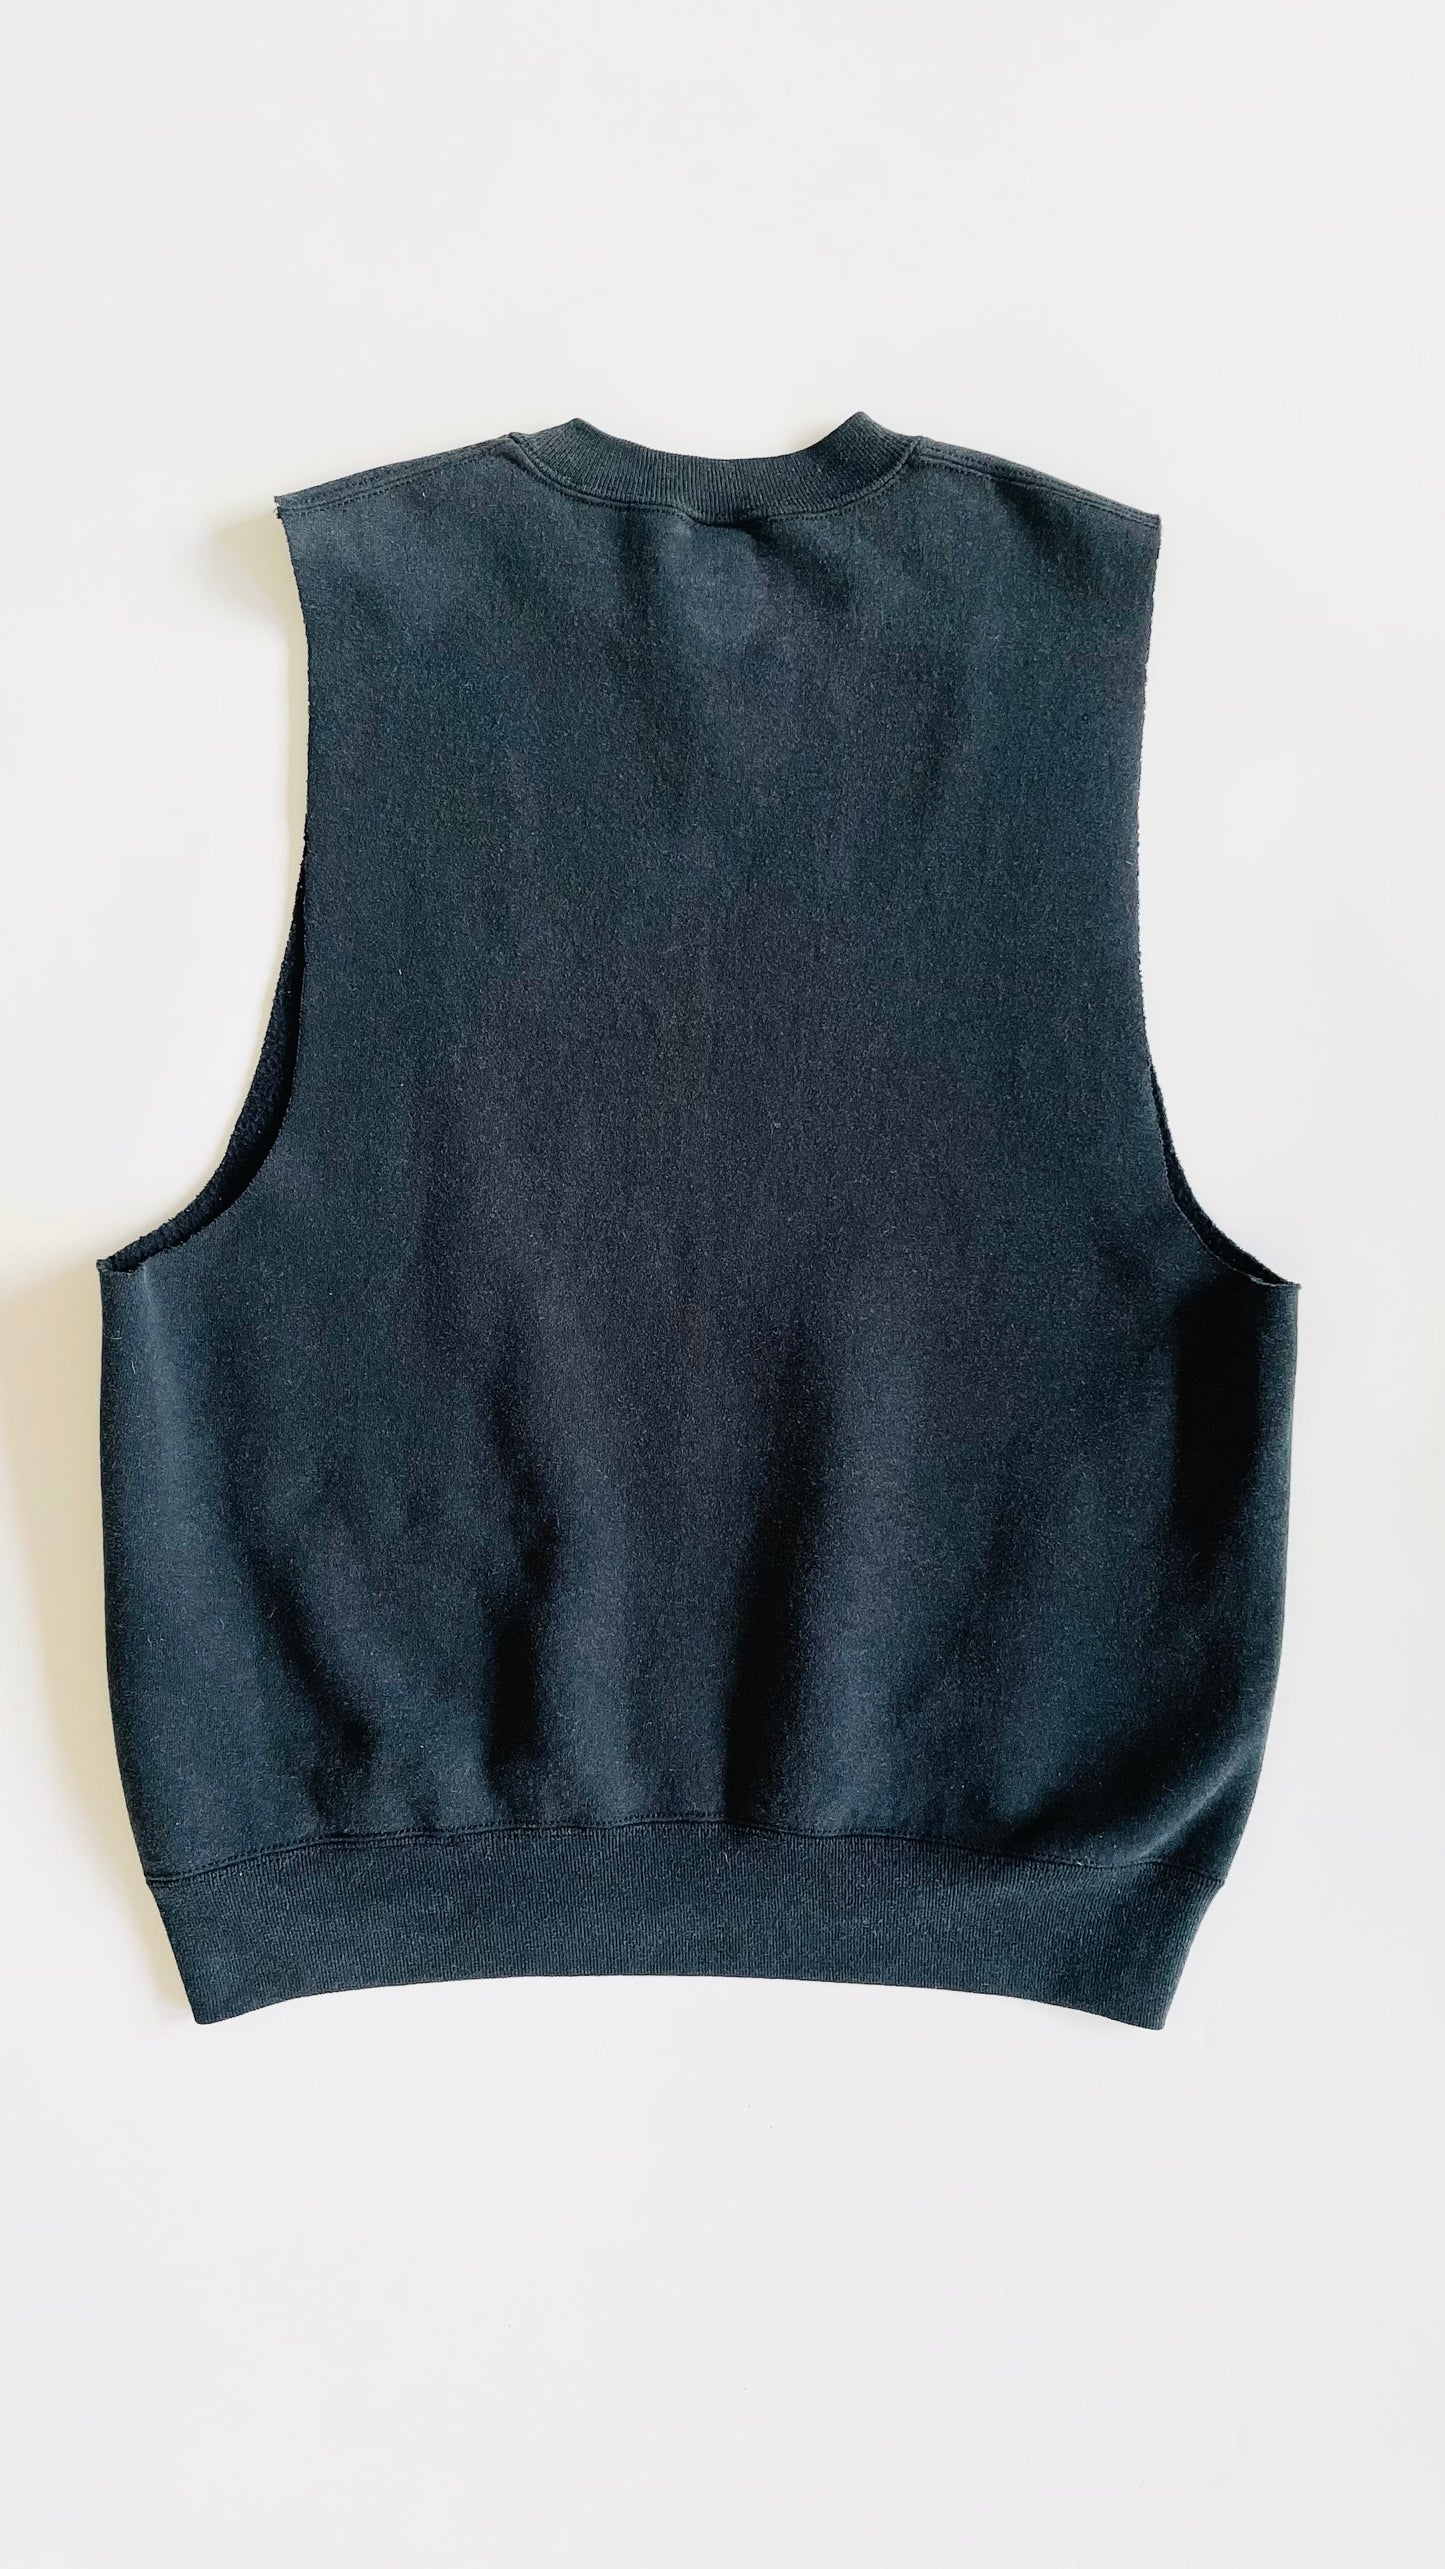 Vintage Russell Athletic faded black sweatshirt vest - Size L